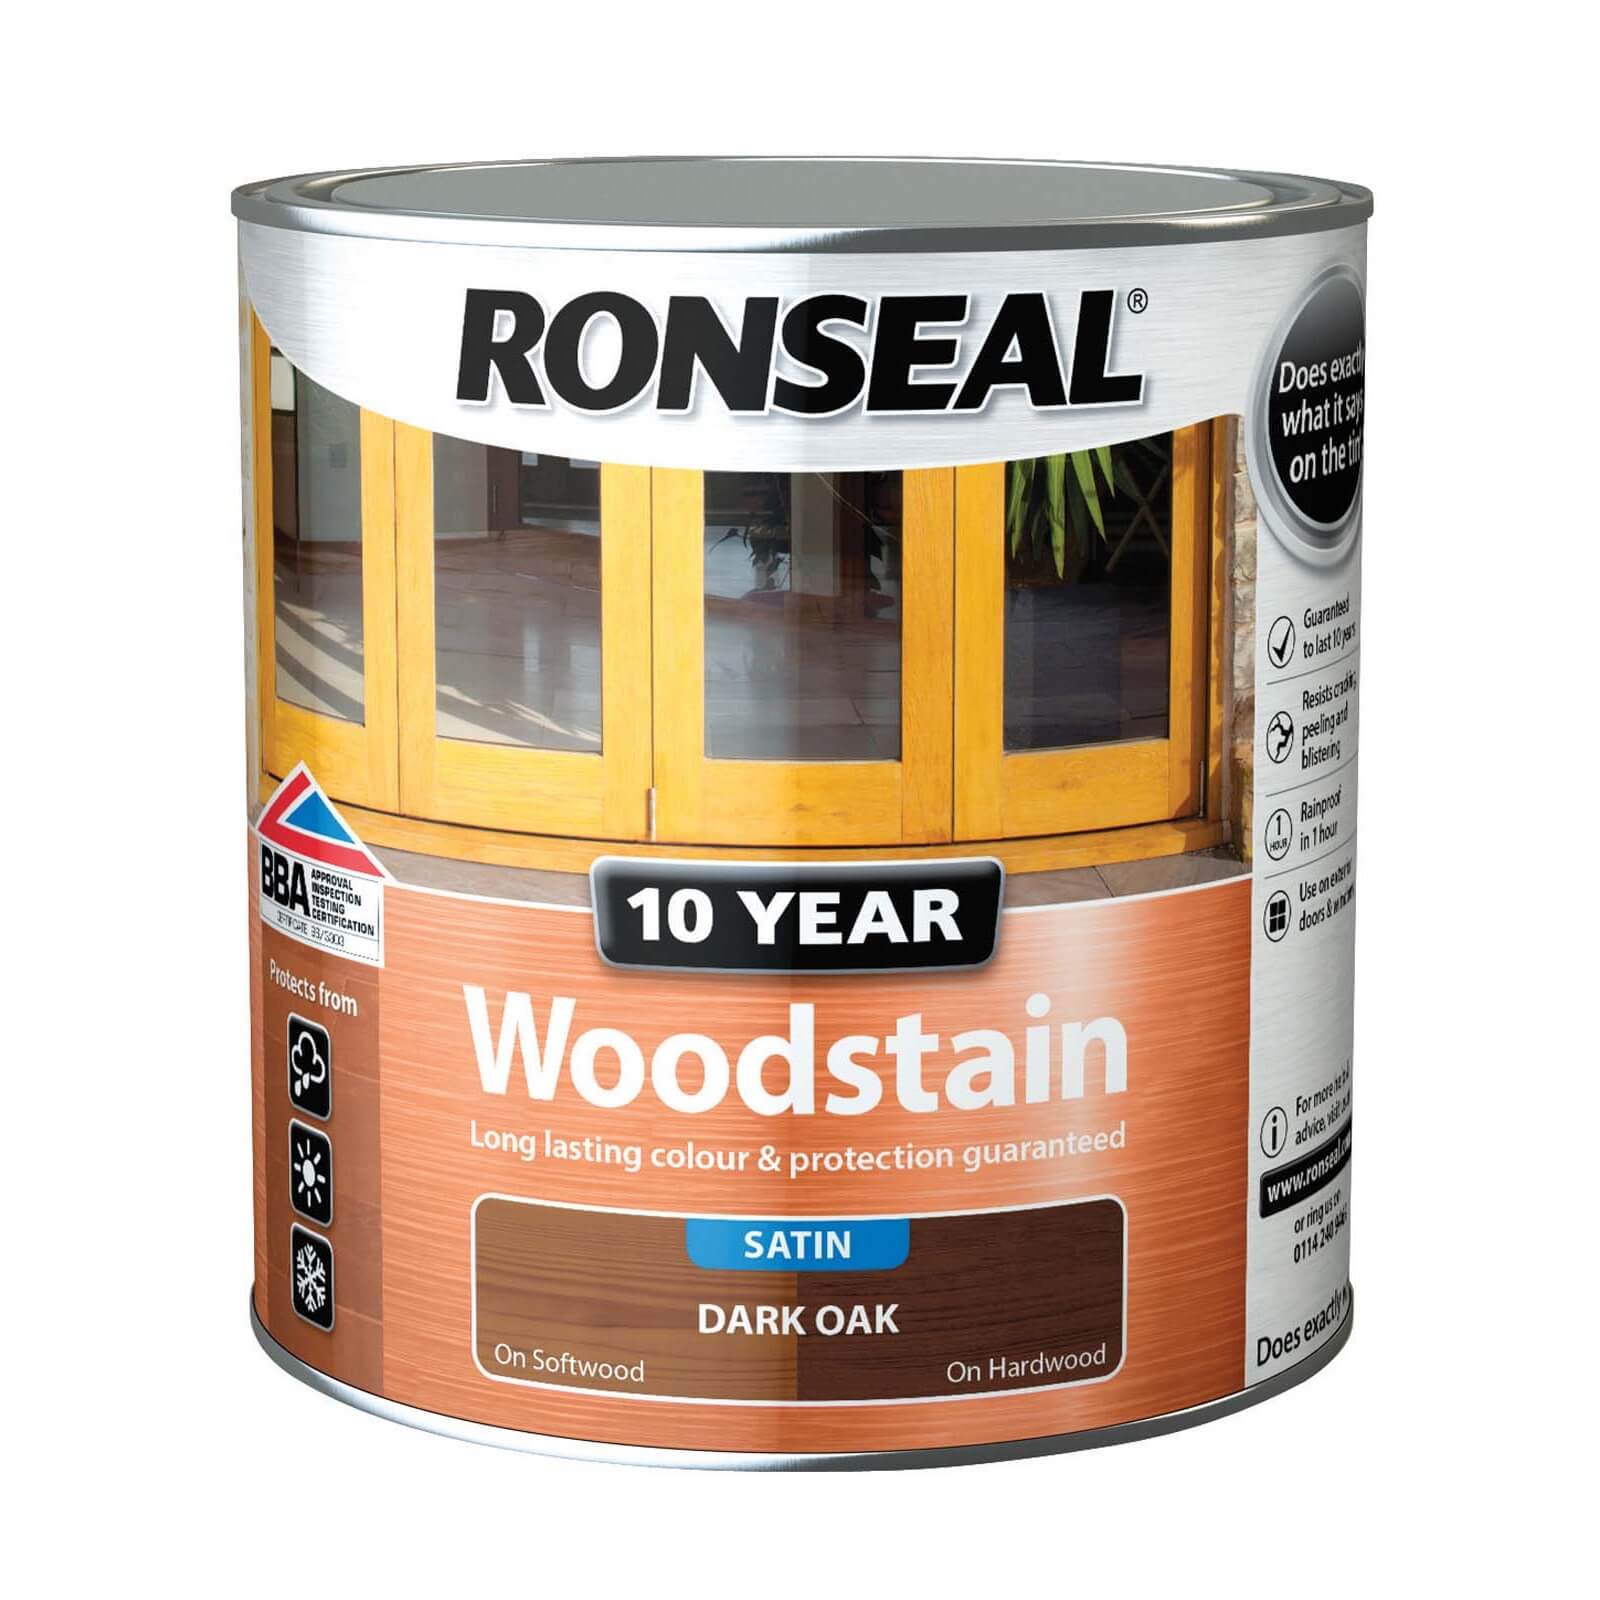 Ronseal 10 Year Woodstain Dark Oak Satin -  2.5L